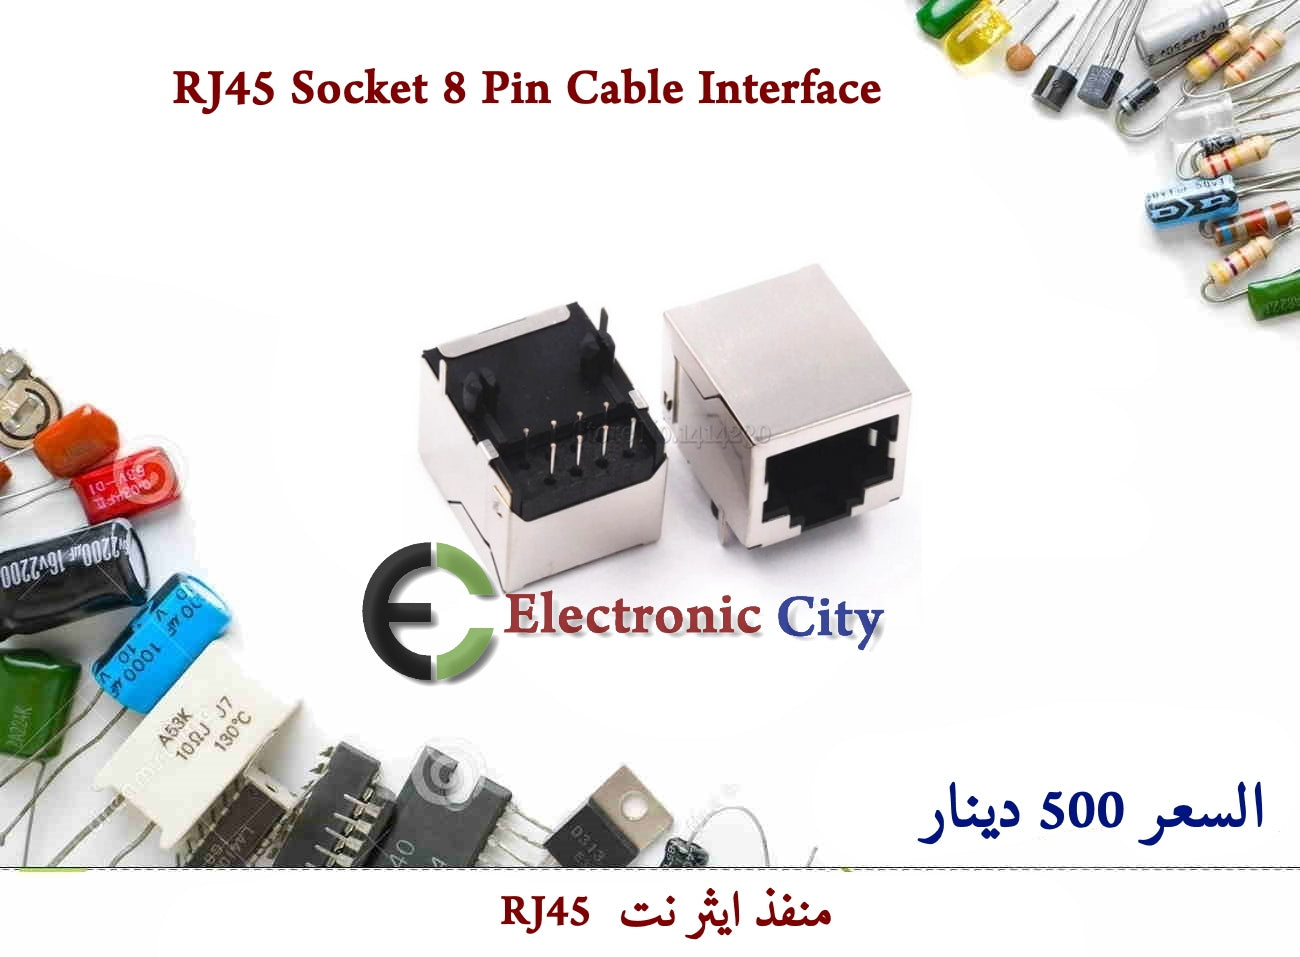 RJ45 Socket 8 Pin Cable Interface